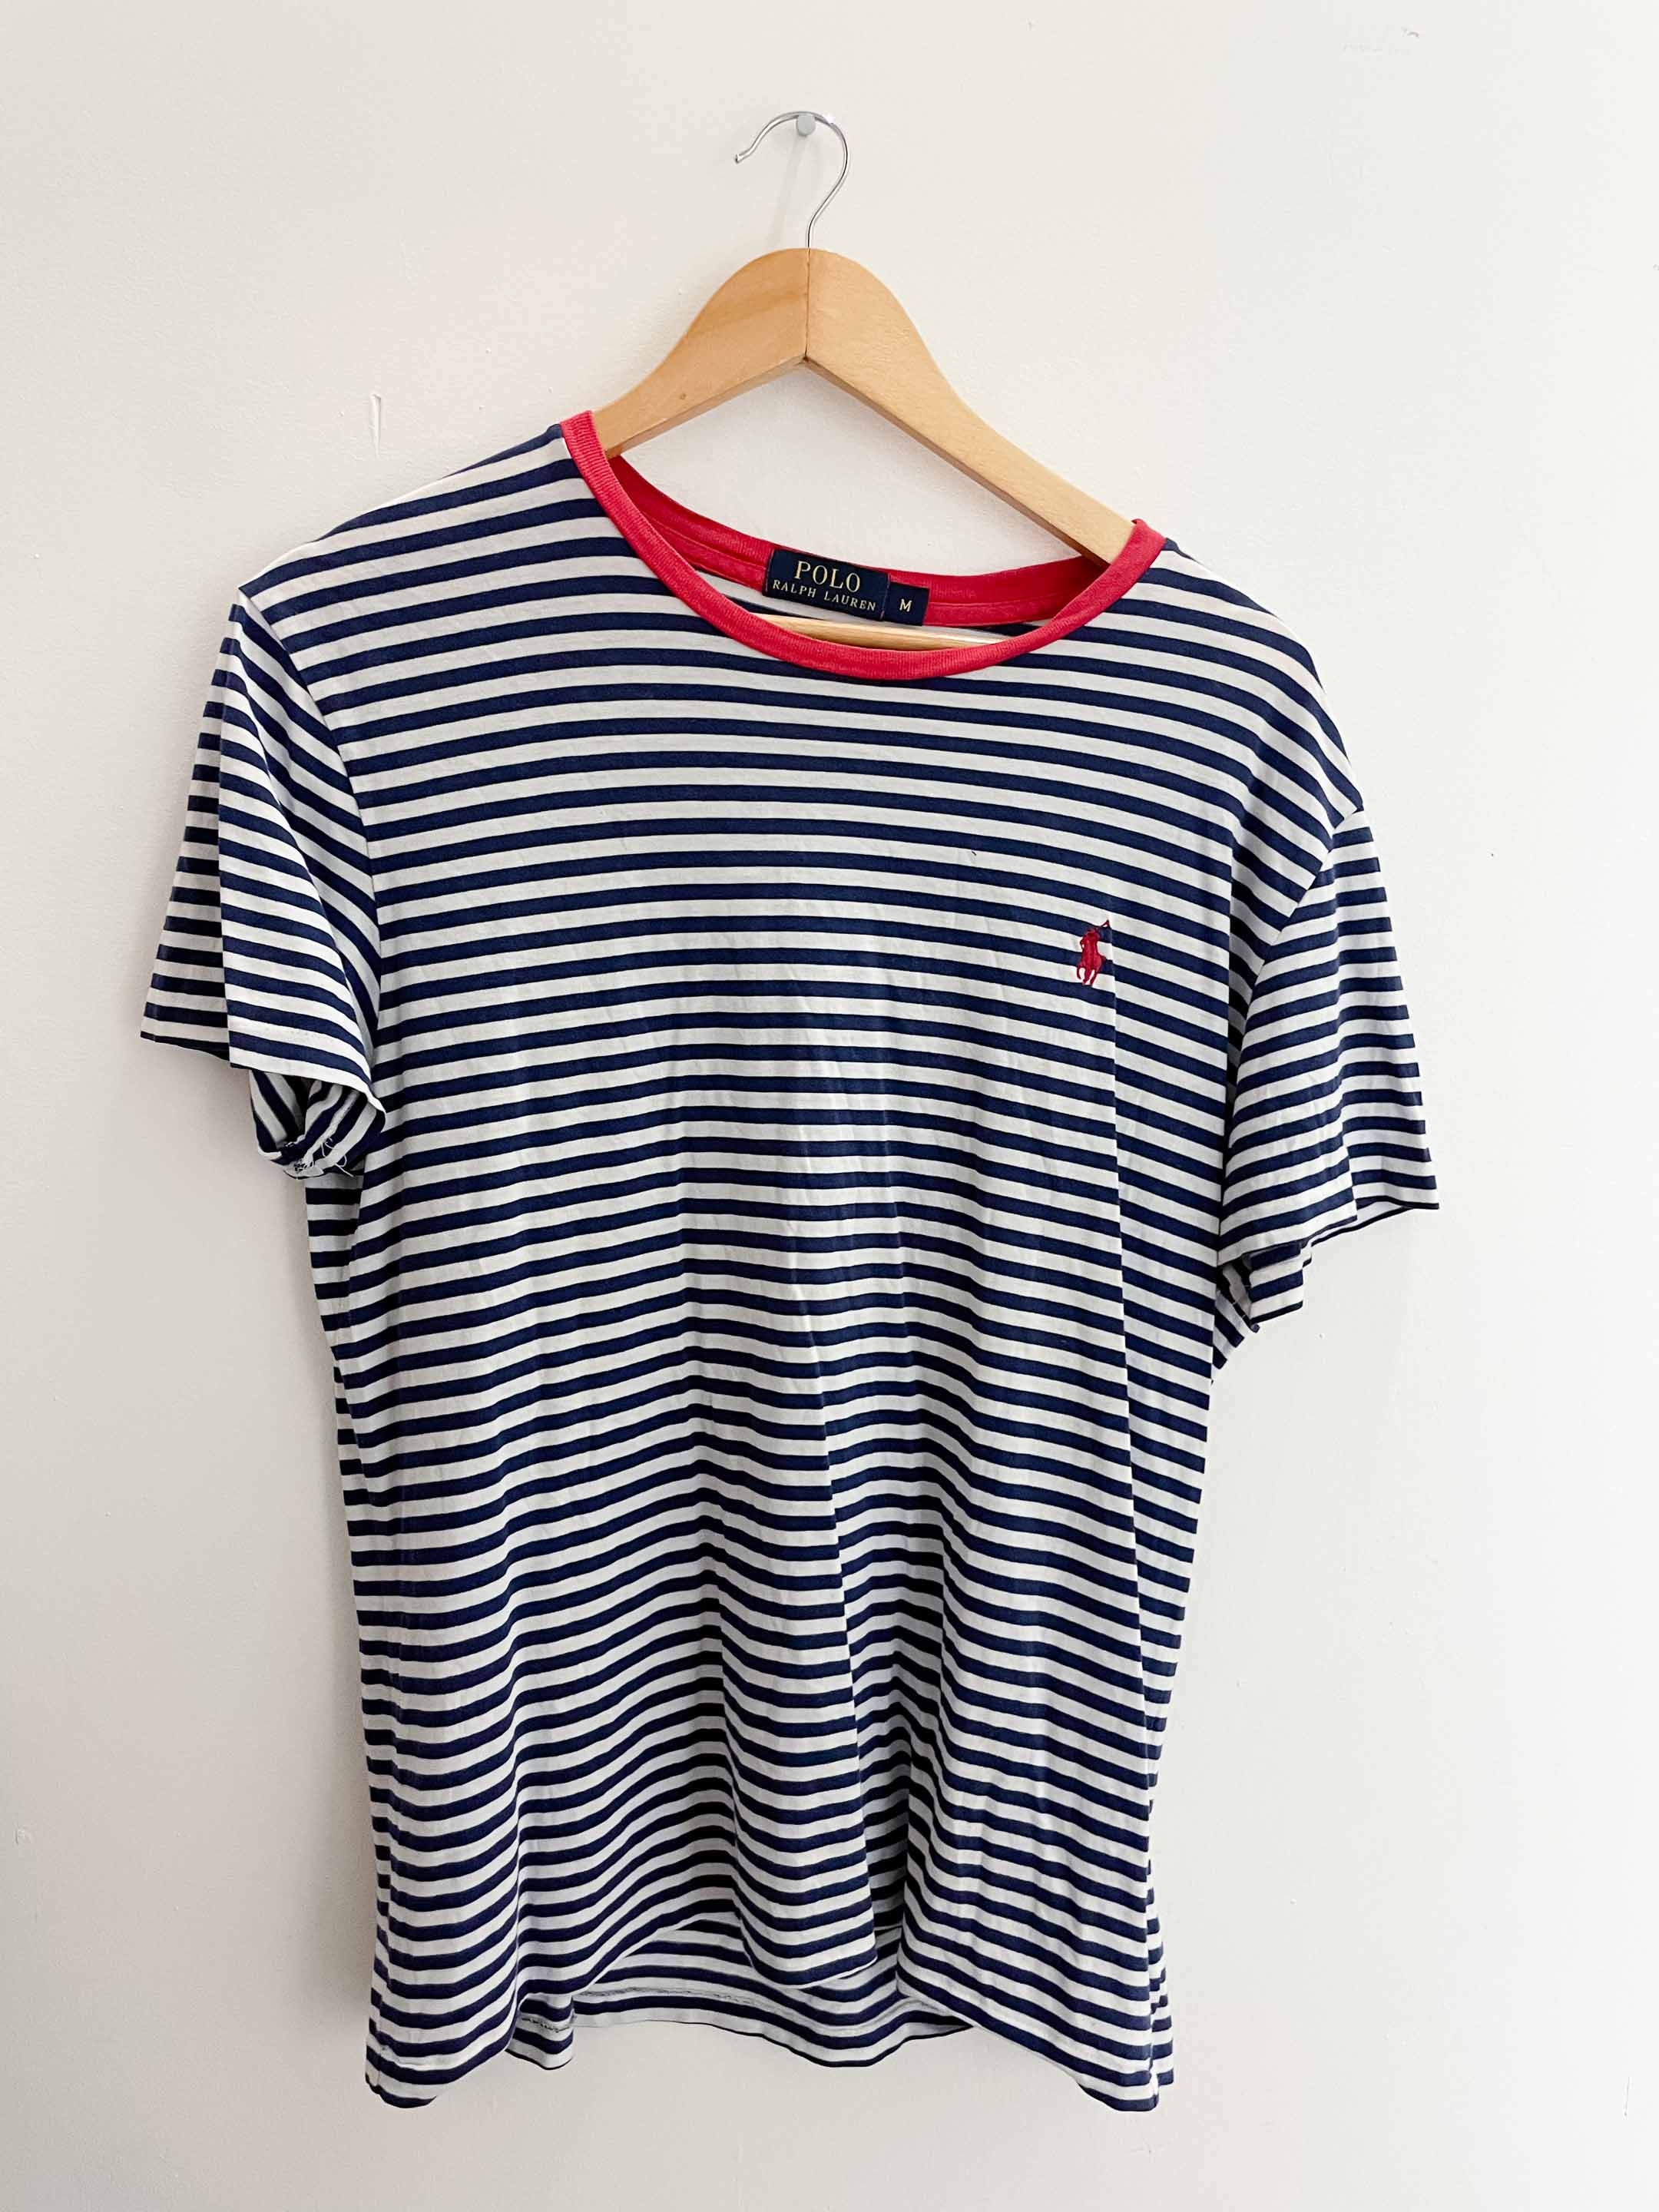 Vintage polo ralph lauren medium blue and white horizontal stripe tshirt